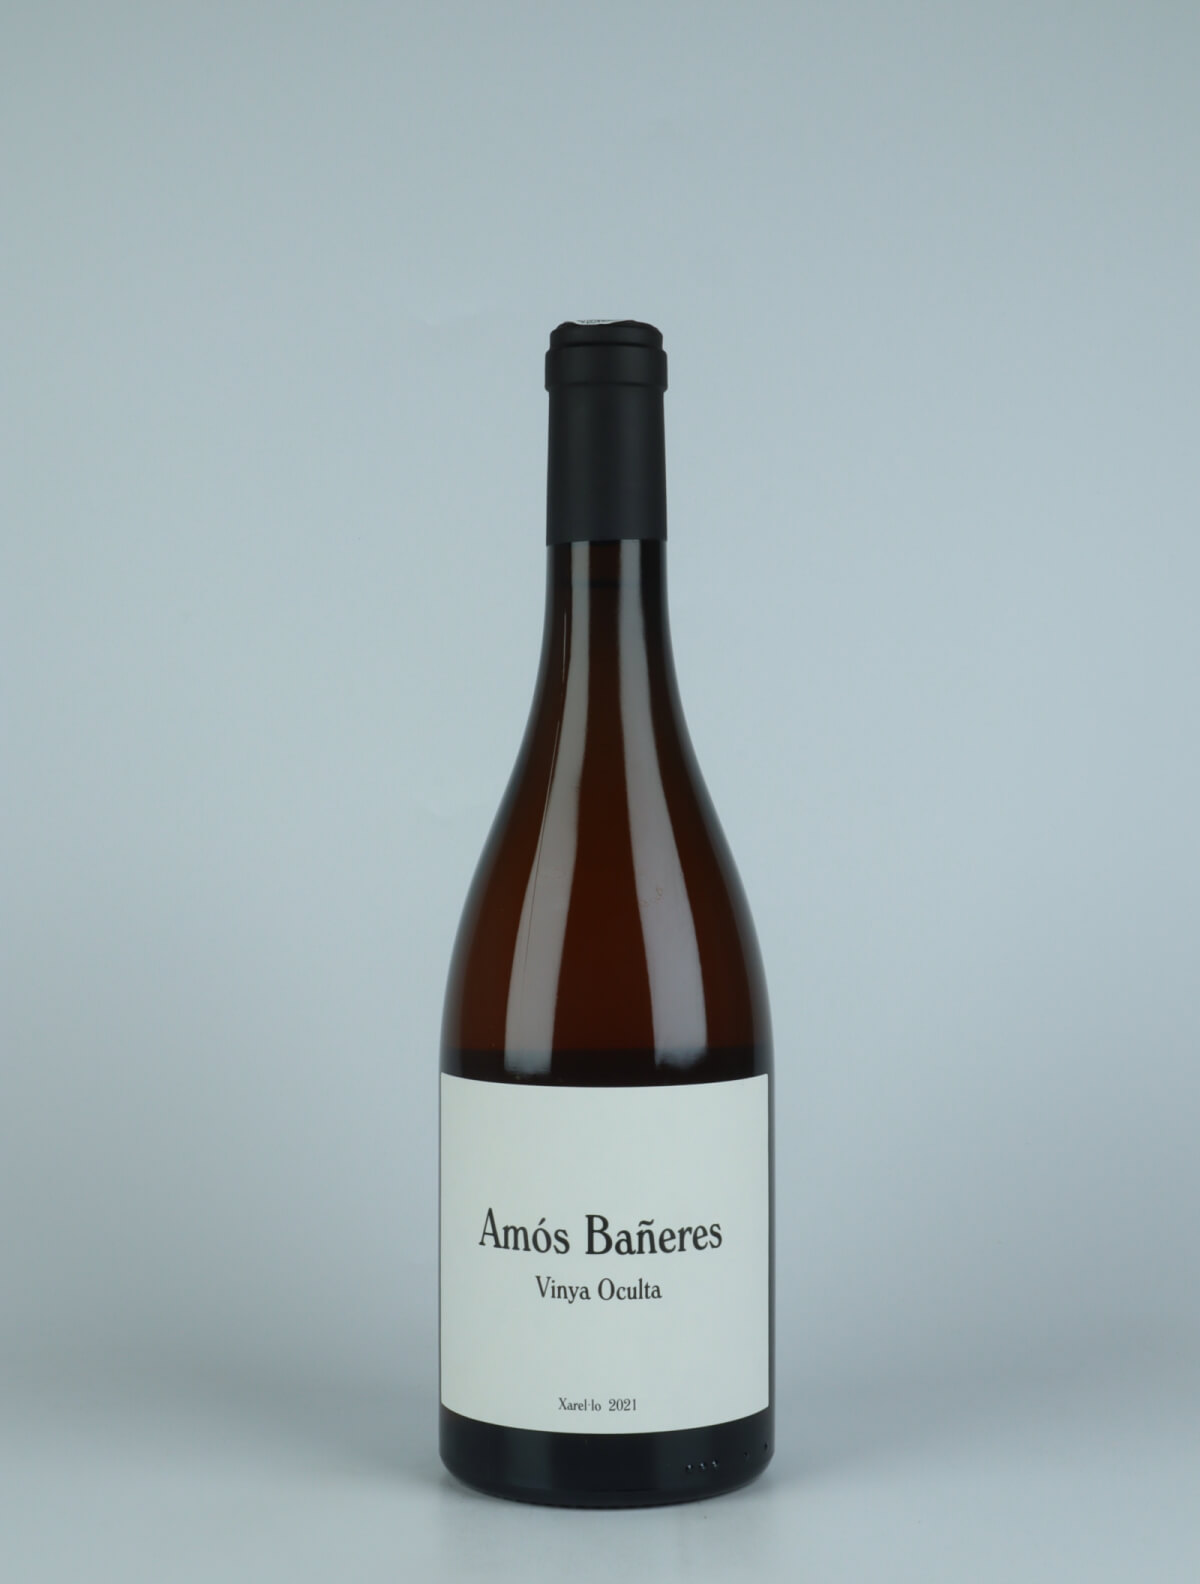 A bottle 2021 Vinya Oculta White wine from Amós Bañeres, Penedès in Spain